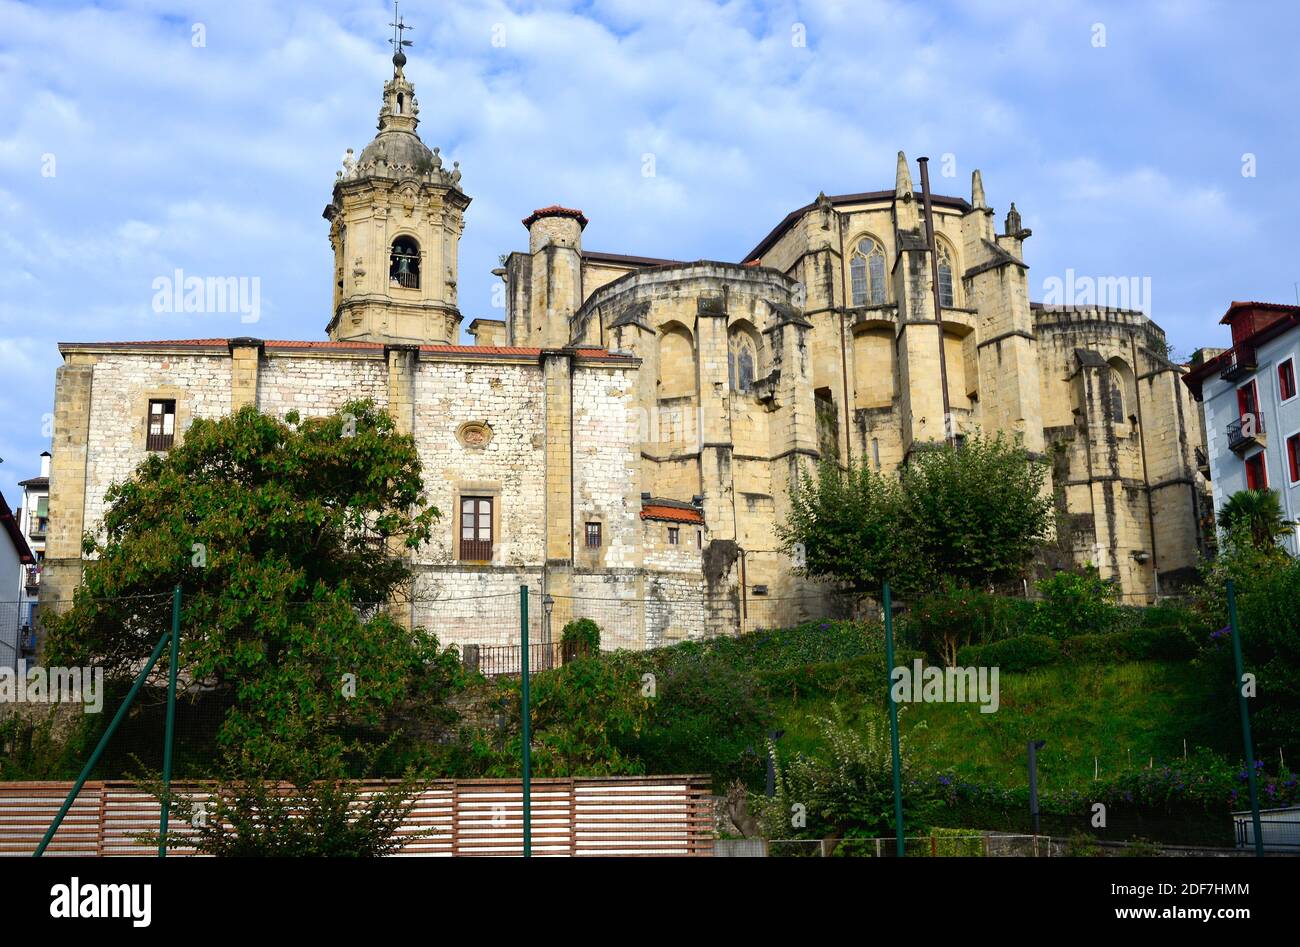 Hondarribia (Fuenterrabía), Iglesia de la Asunción y del Manzano 15-17 siglos. Guipúzcoa, Euskadi, España. Foto de stock